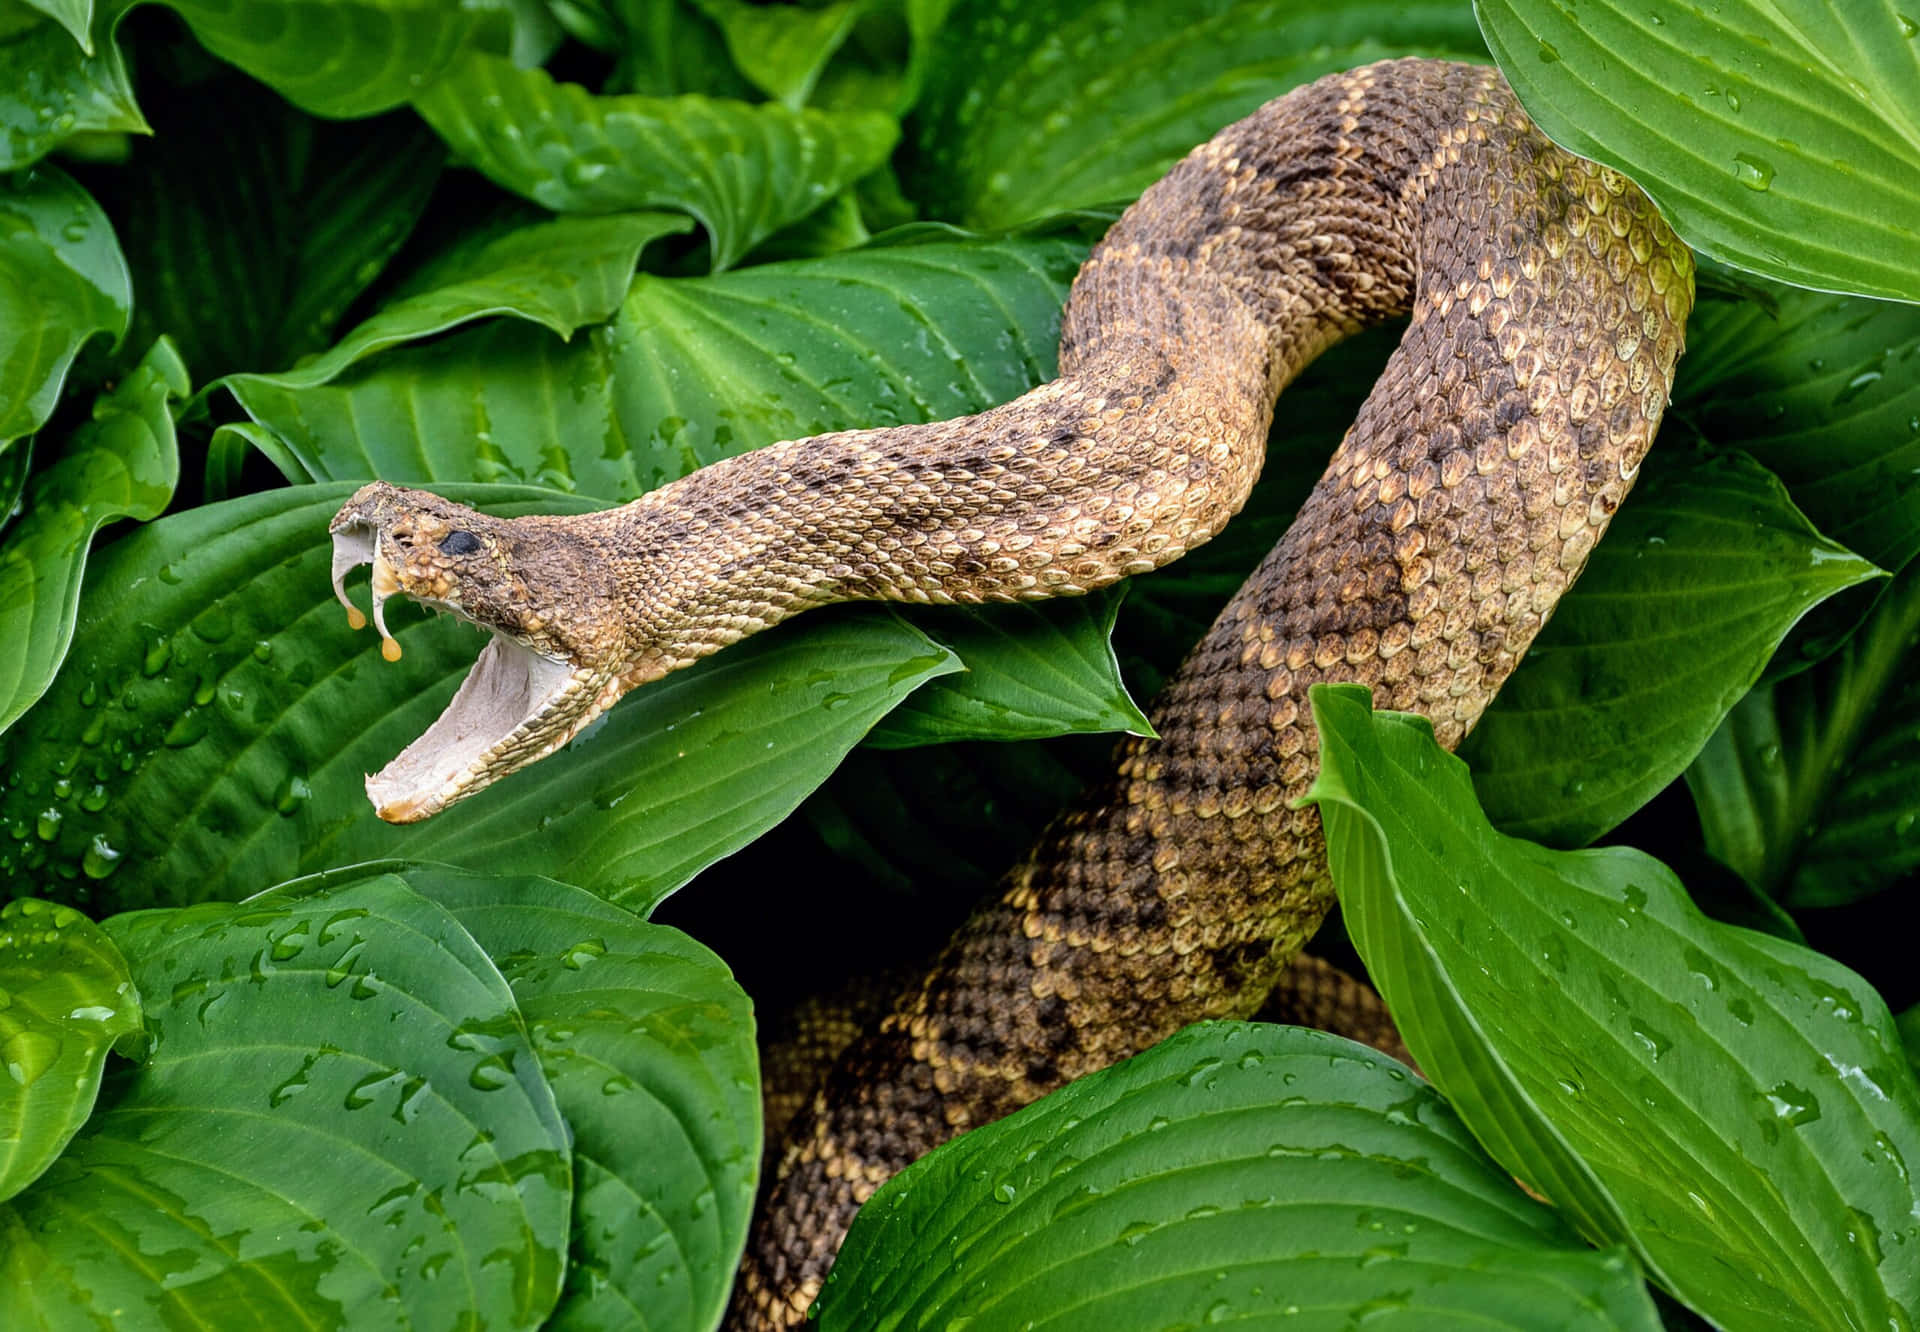 A Michigan snake basking in the sun.